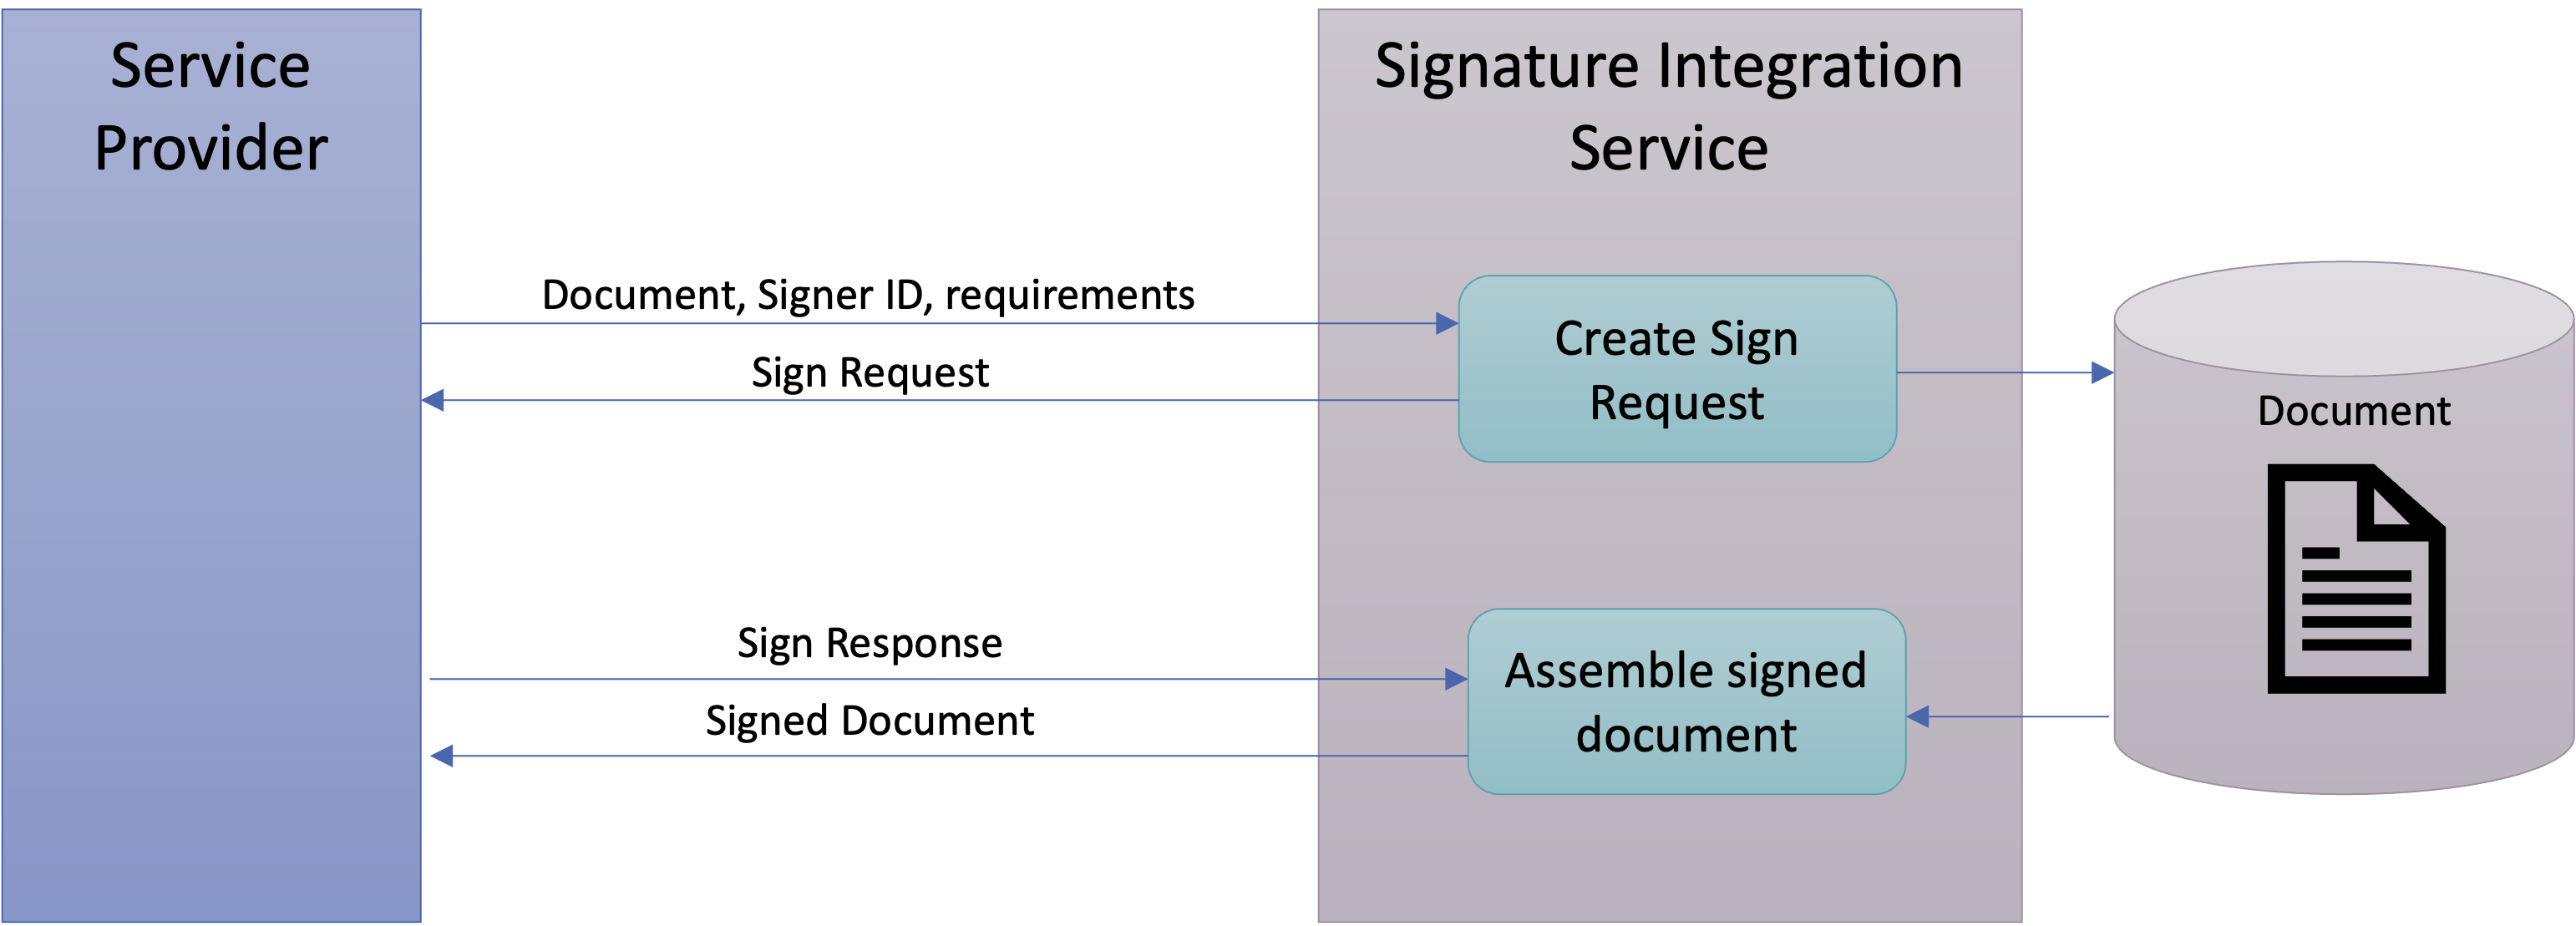 Signature Service Integration